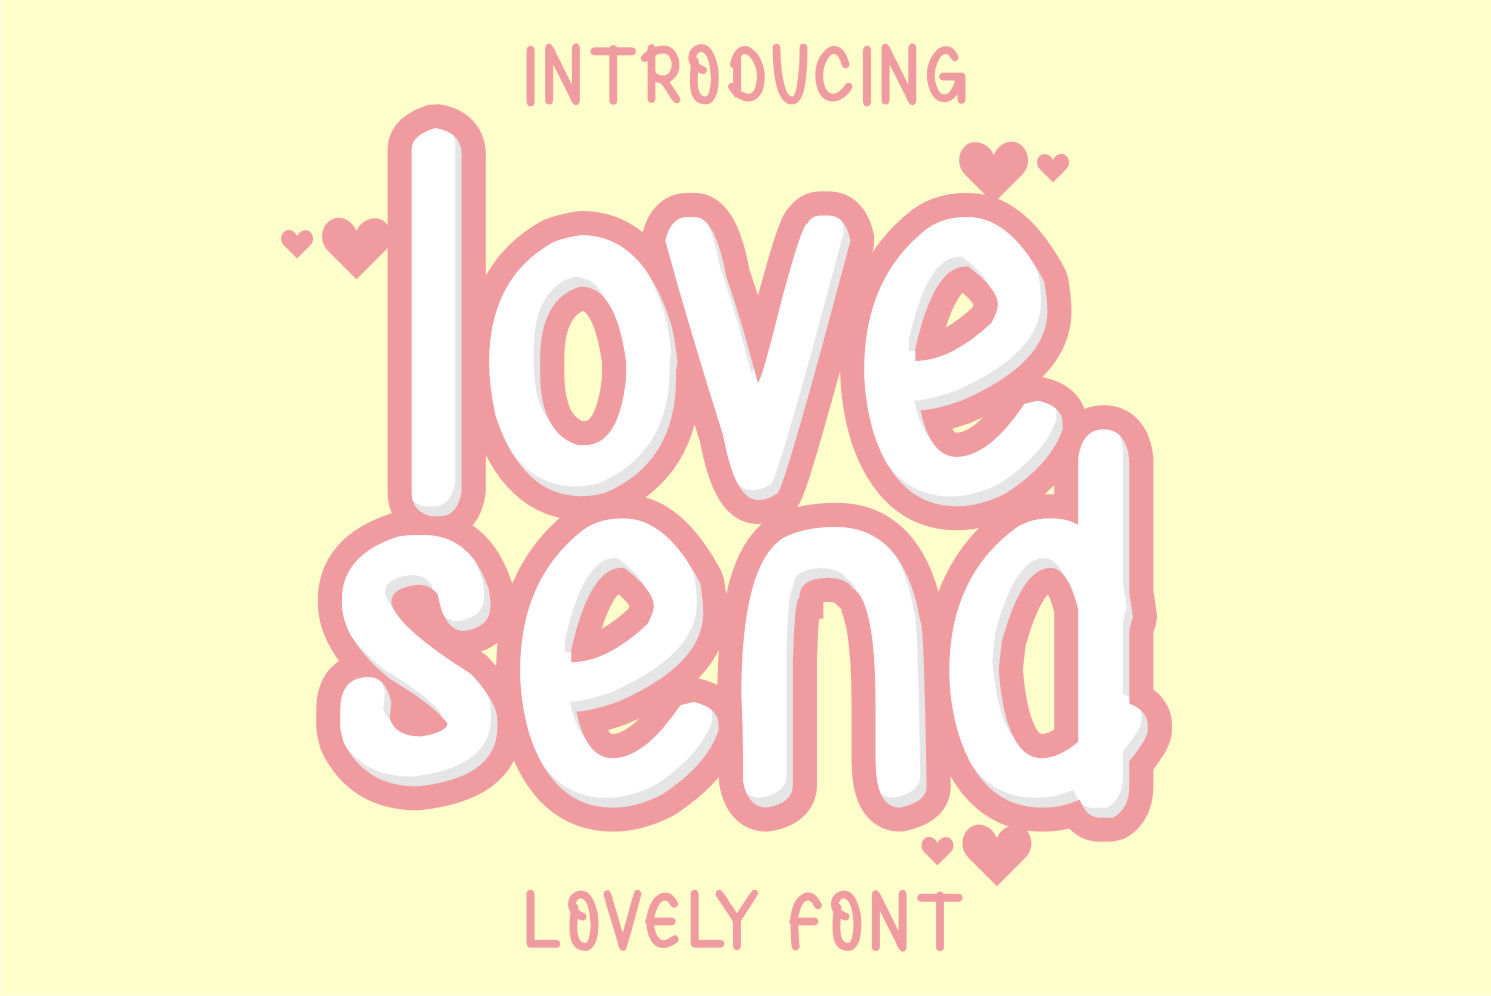 love send